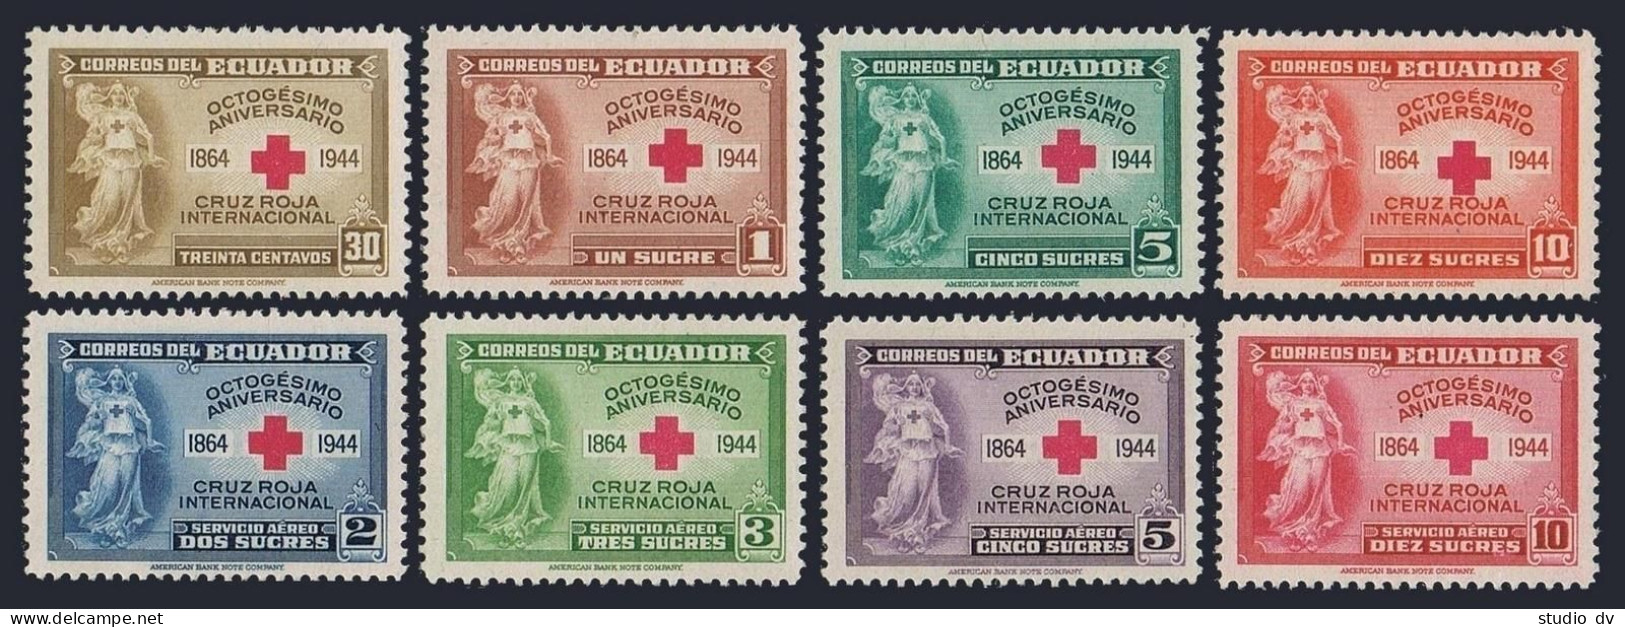 Ecuador 440-443 MNH,C131-C134,hinged.Mi 555-562. International Red Cross-80.1945 - Ecuador